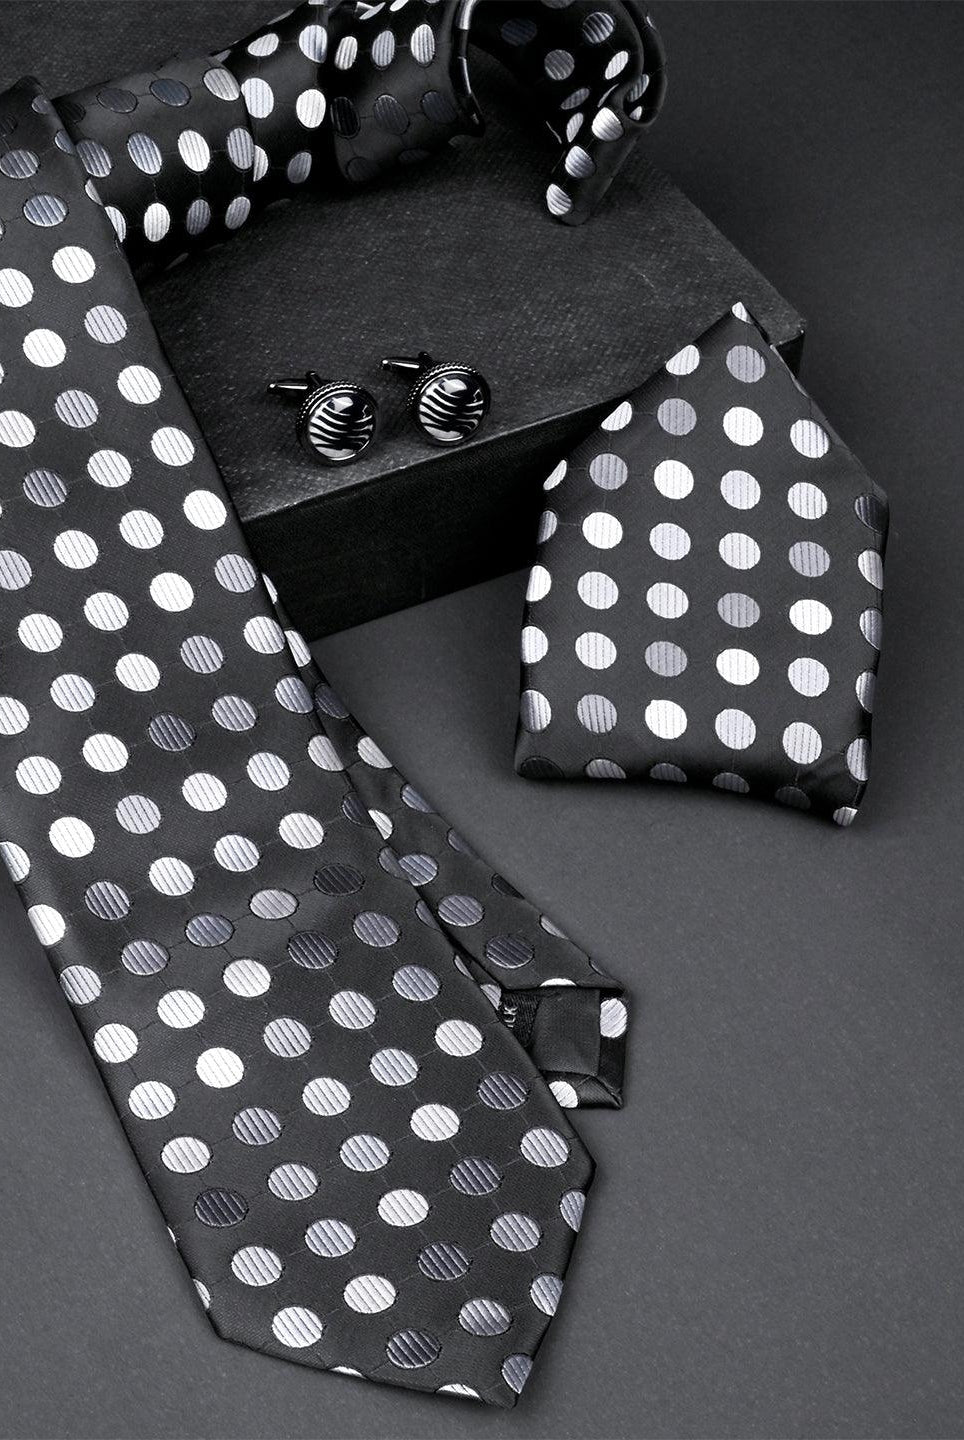 Black Polka Dots Micro Silk Necktie With Pocket Square & Cufflinks - Tistabene